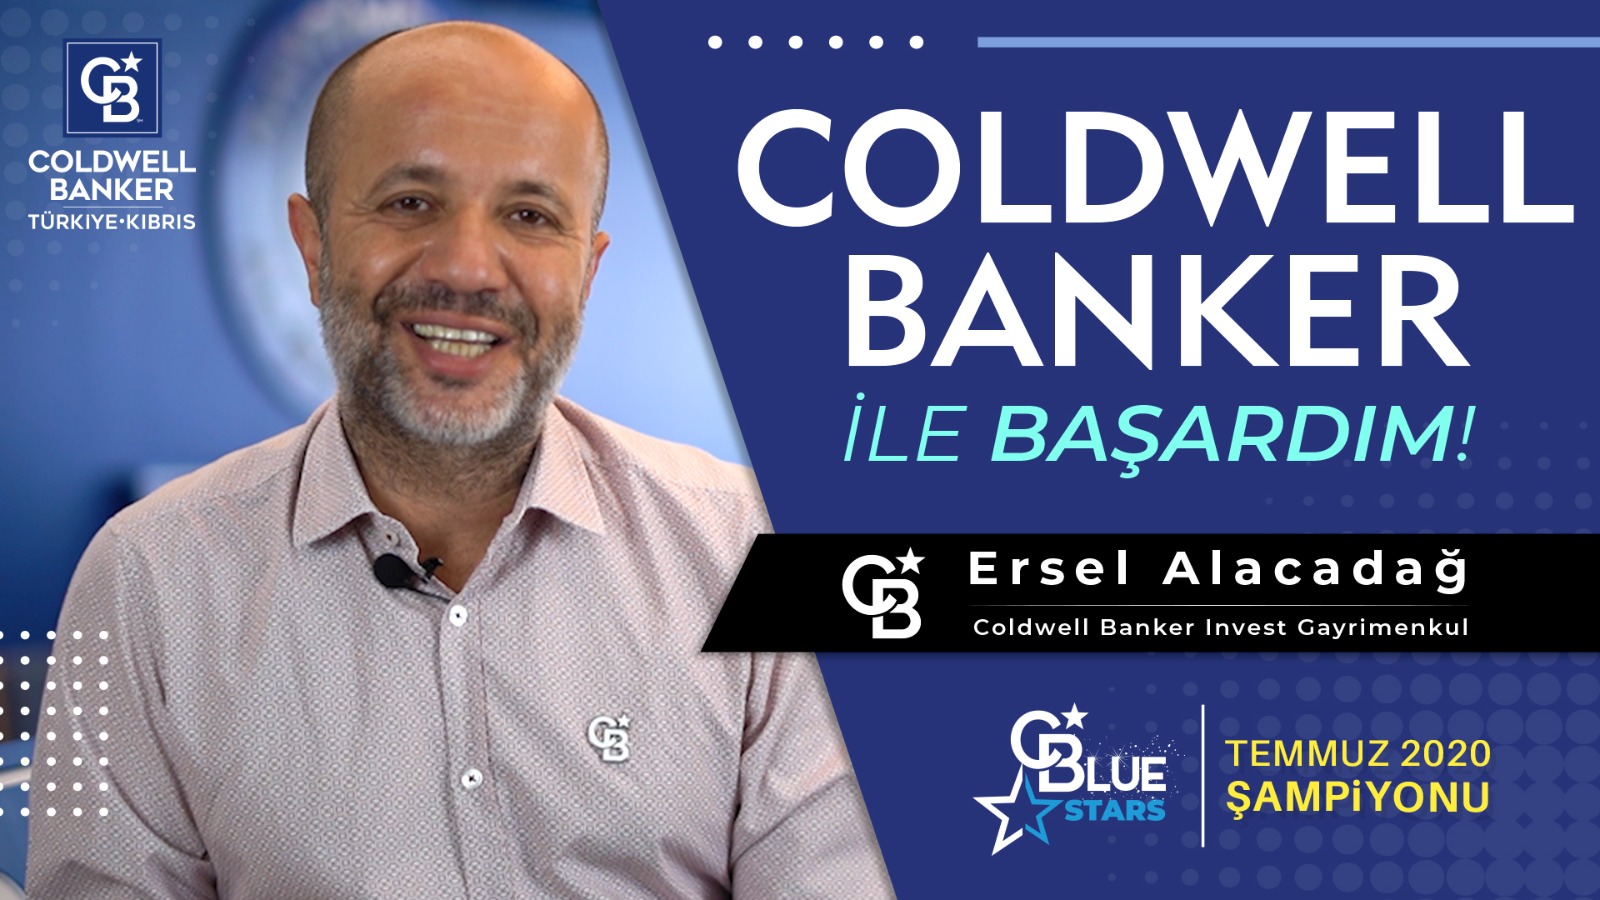 “Coldwell Banker ile Başardım” Ersel Alacadağ (Broker Owner) | Coldwell Banker®